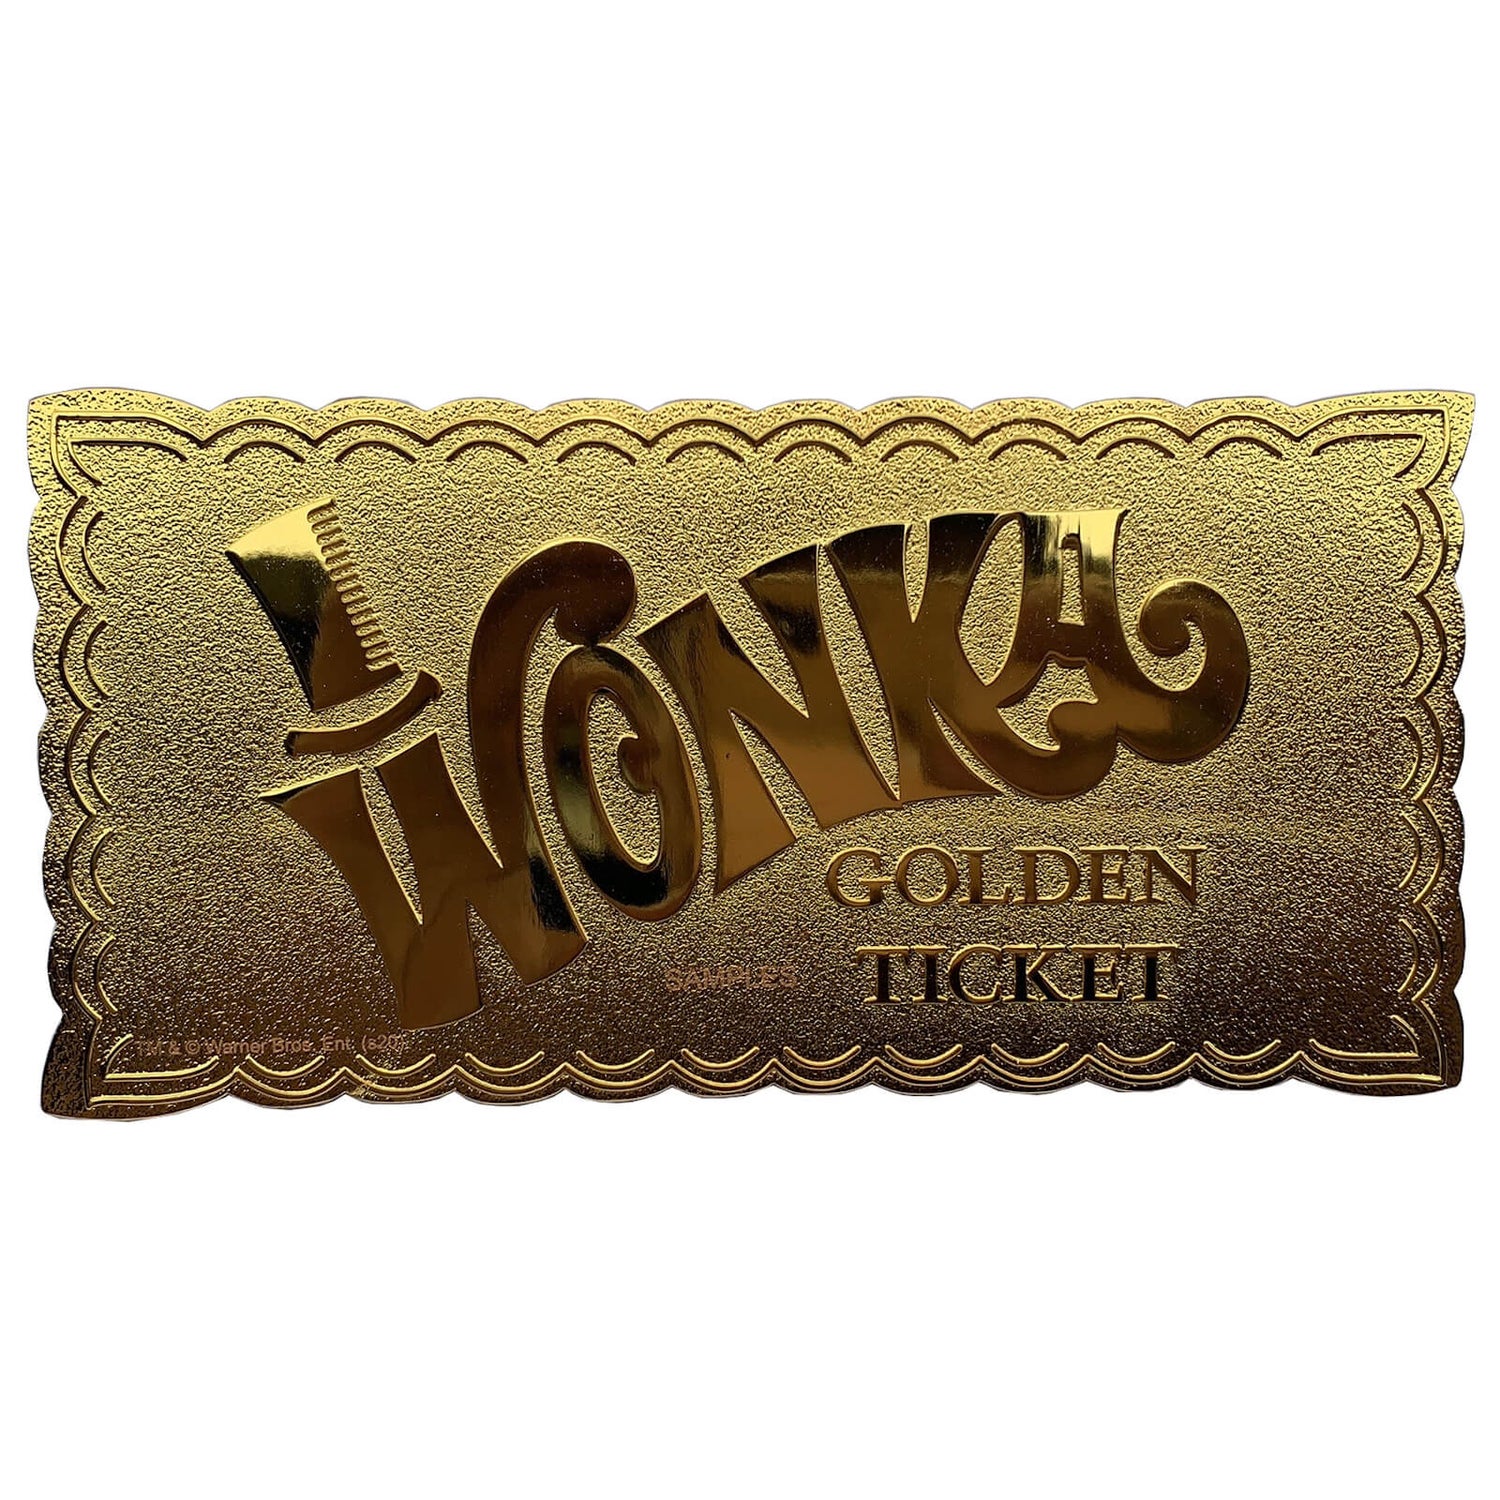 20 Chocolate Wonka Souvenir Ticket Gold 1 Faz Personalizado